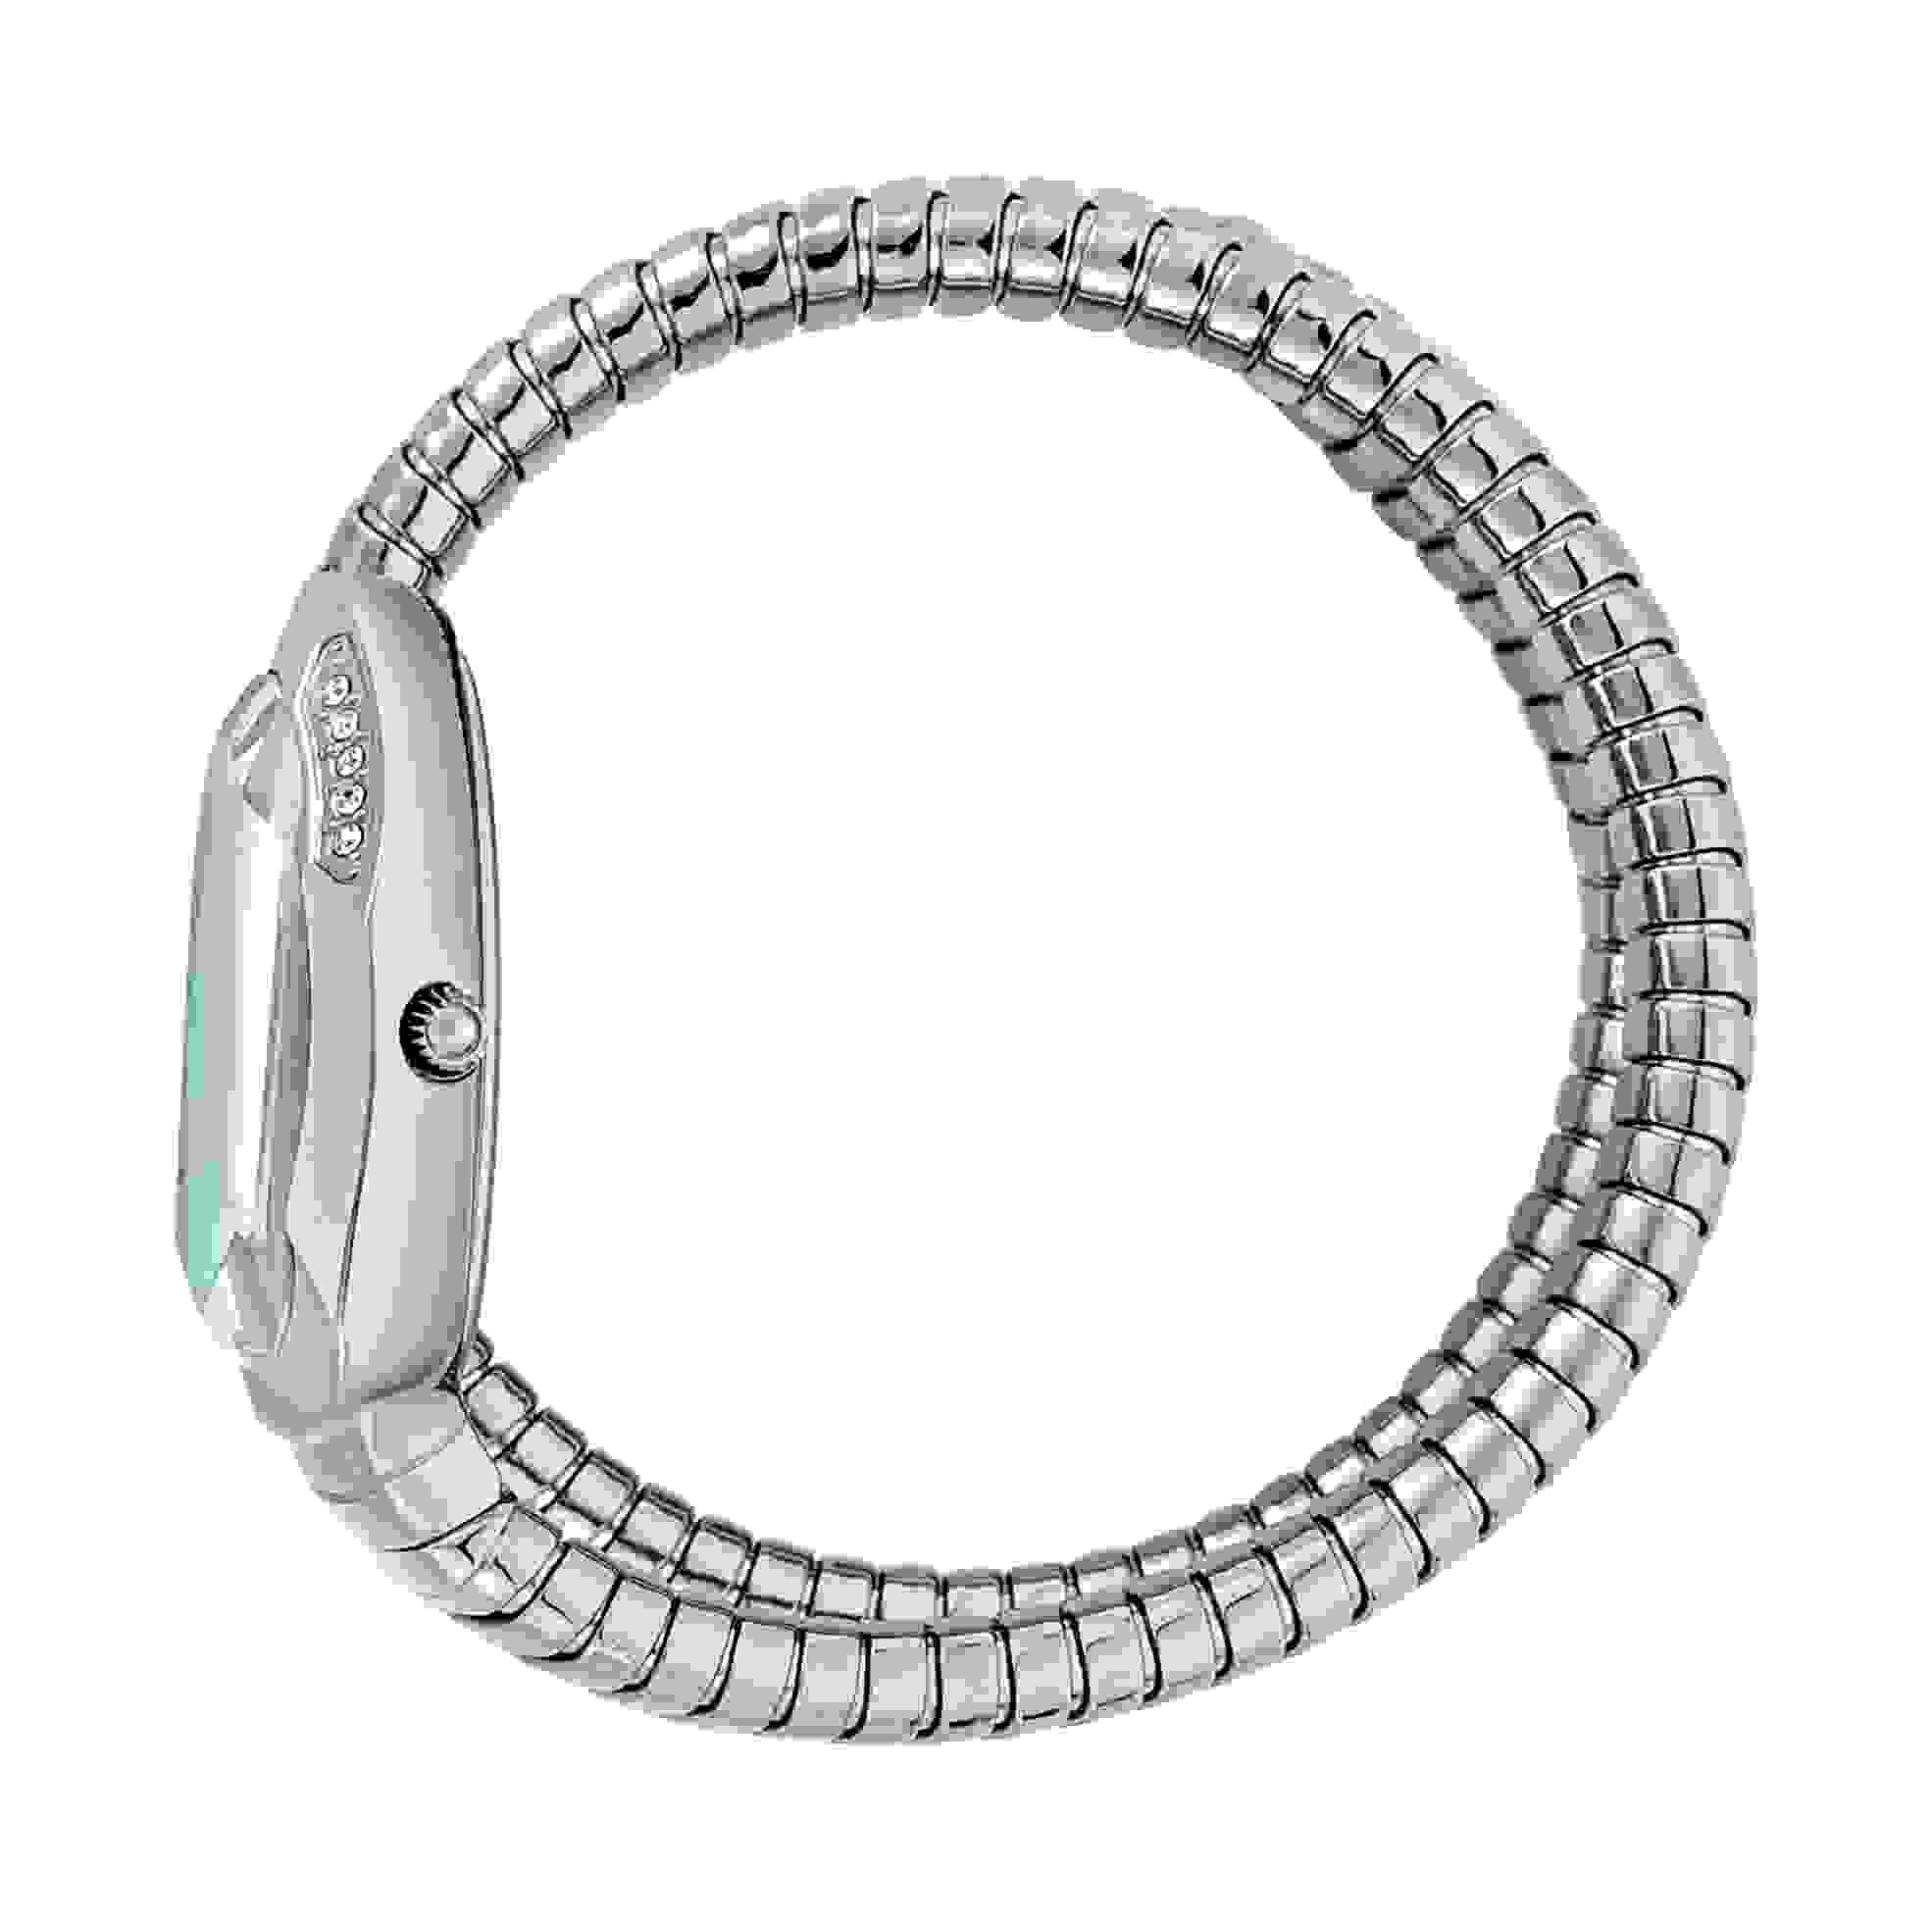 Just Cavalli Signature Snake Watch Silver/White JC1L209M0015